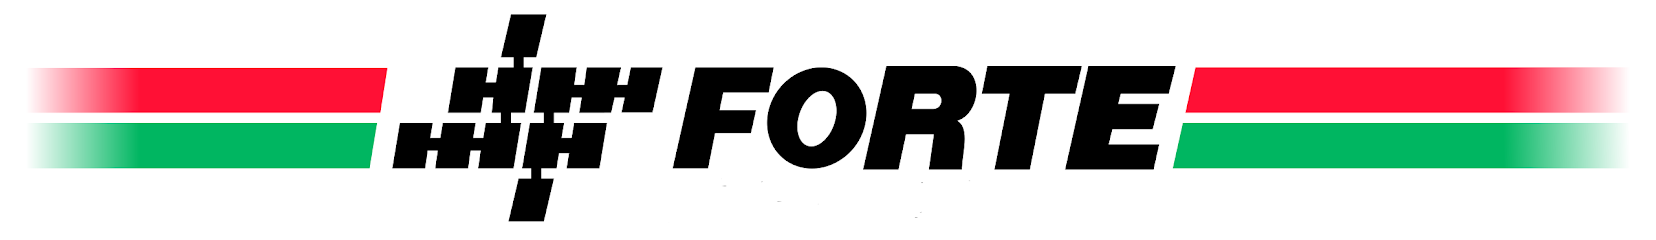 FORTE Photochemical Company